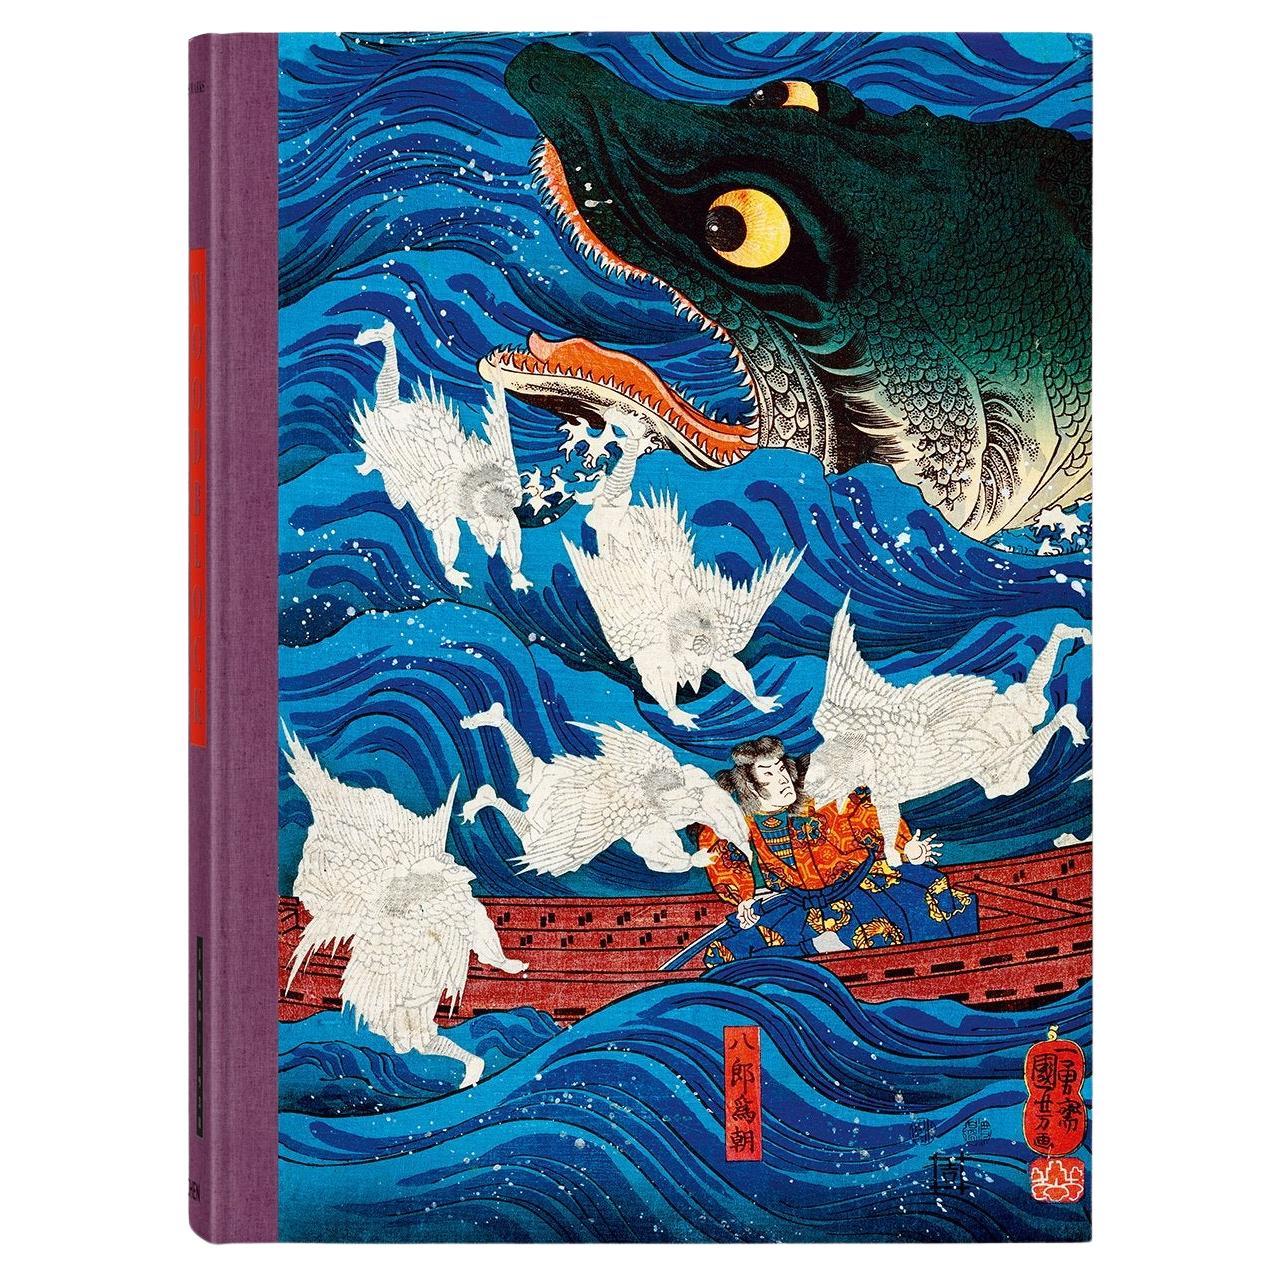 XXL Japanese Woodblock Prints Book